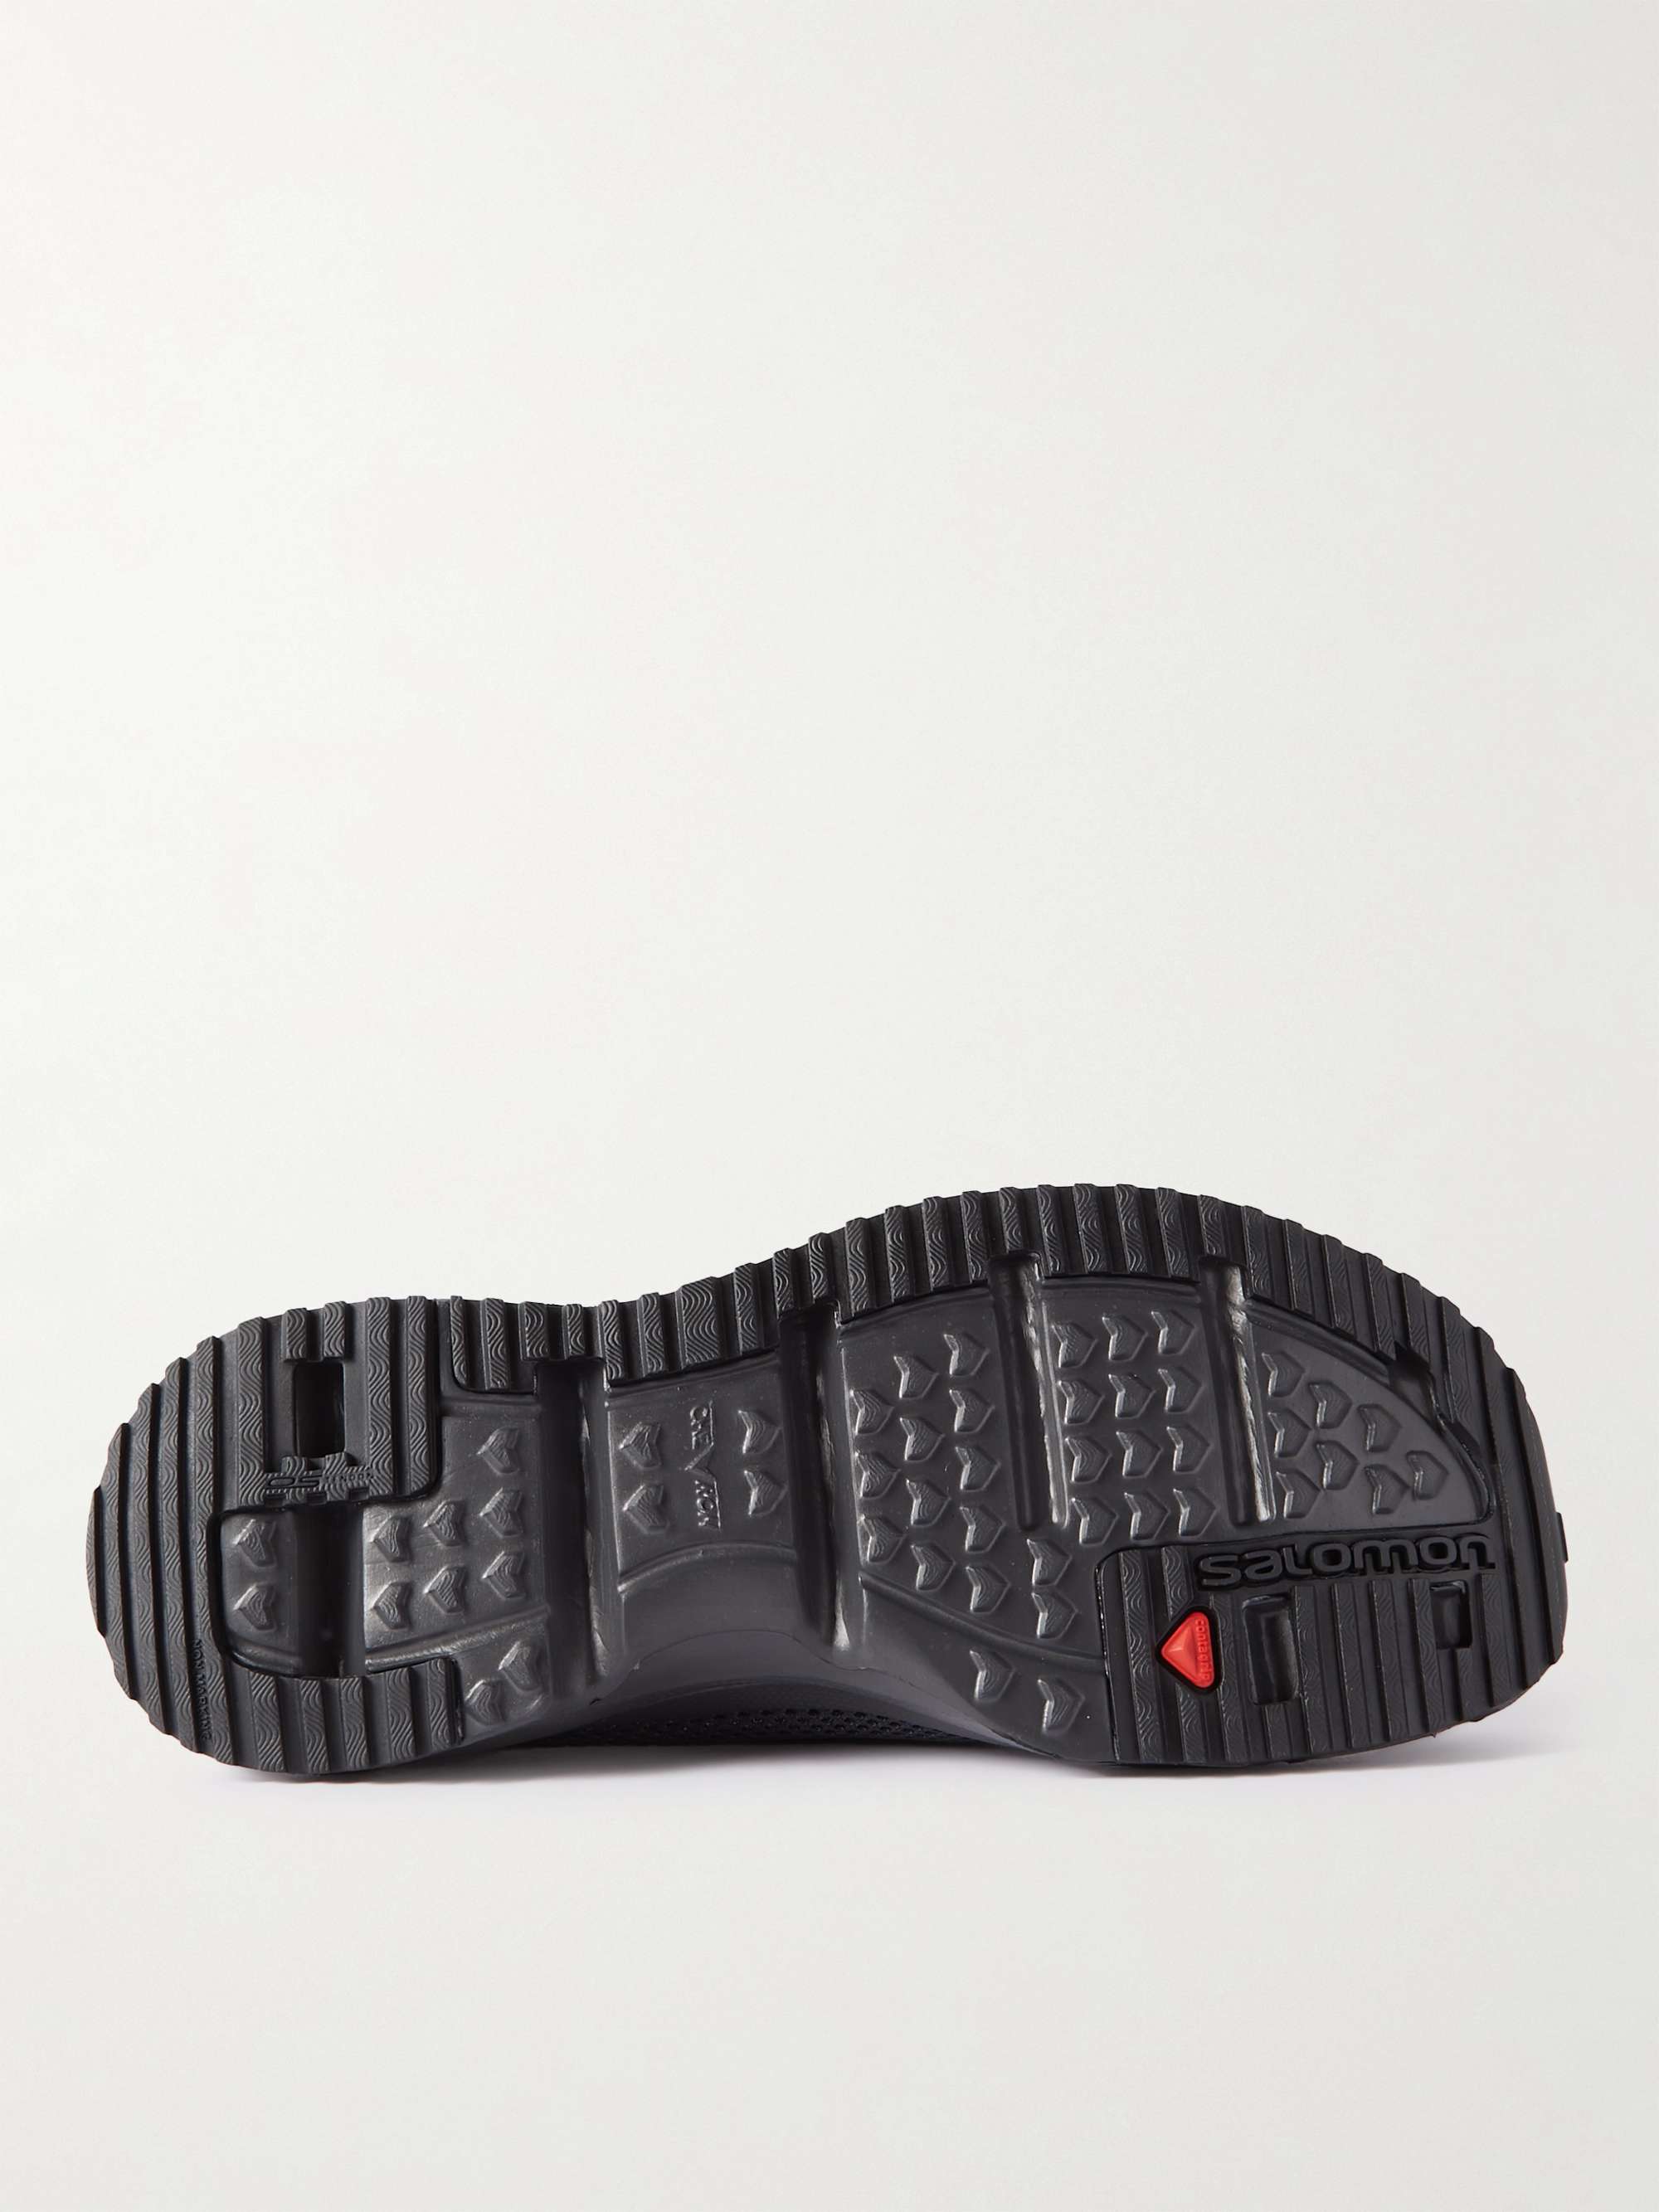 SALOMON RX Slide 3.0 Suede-Trimmed Mesh Slip-On Sneakers